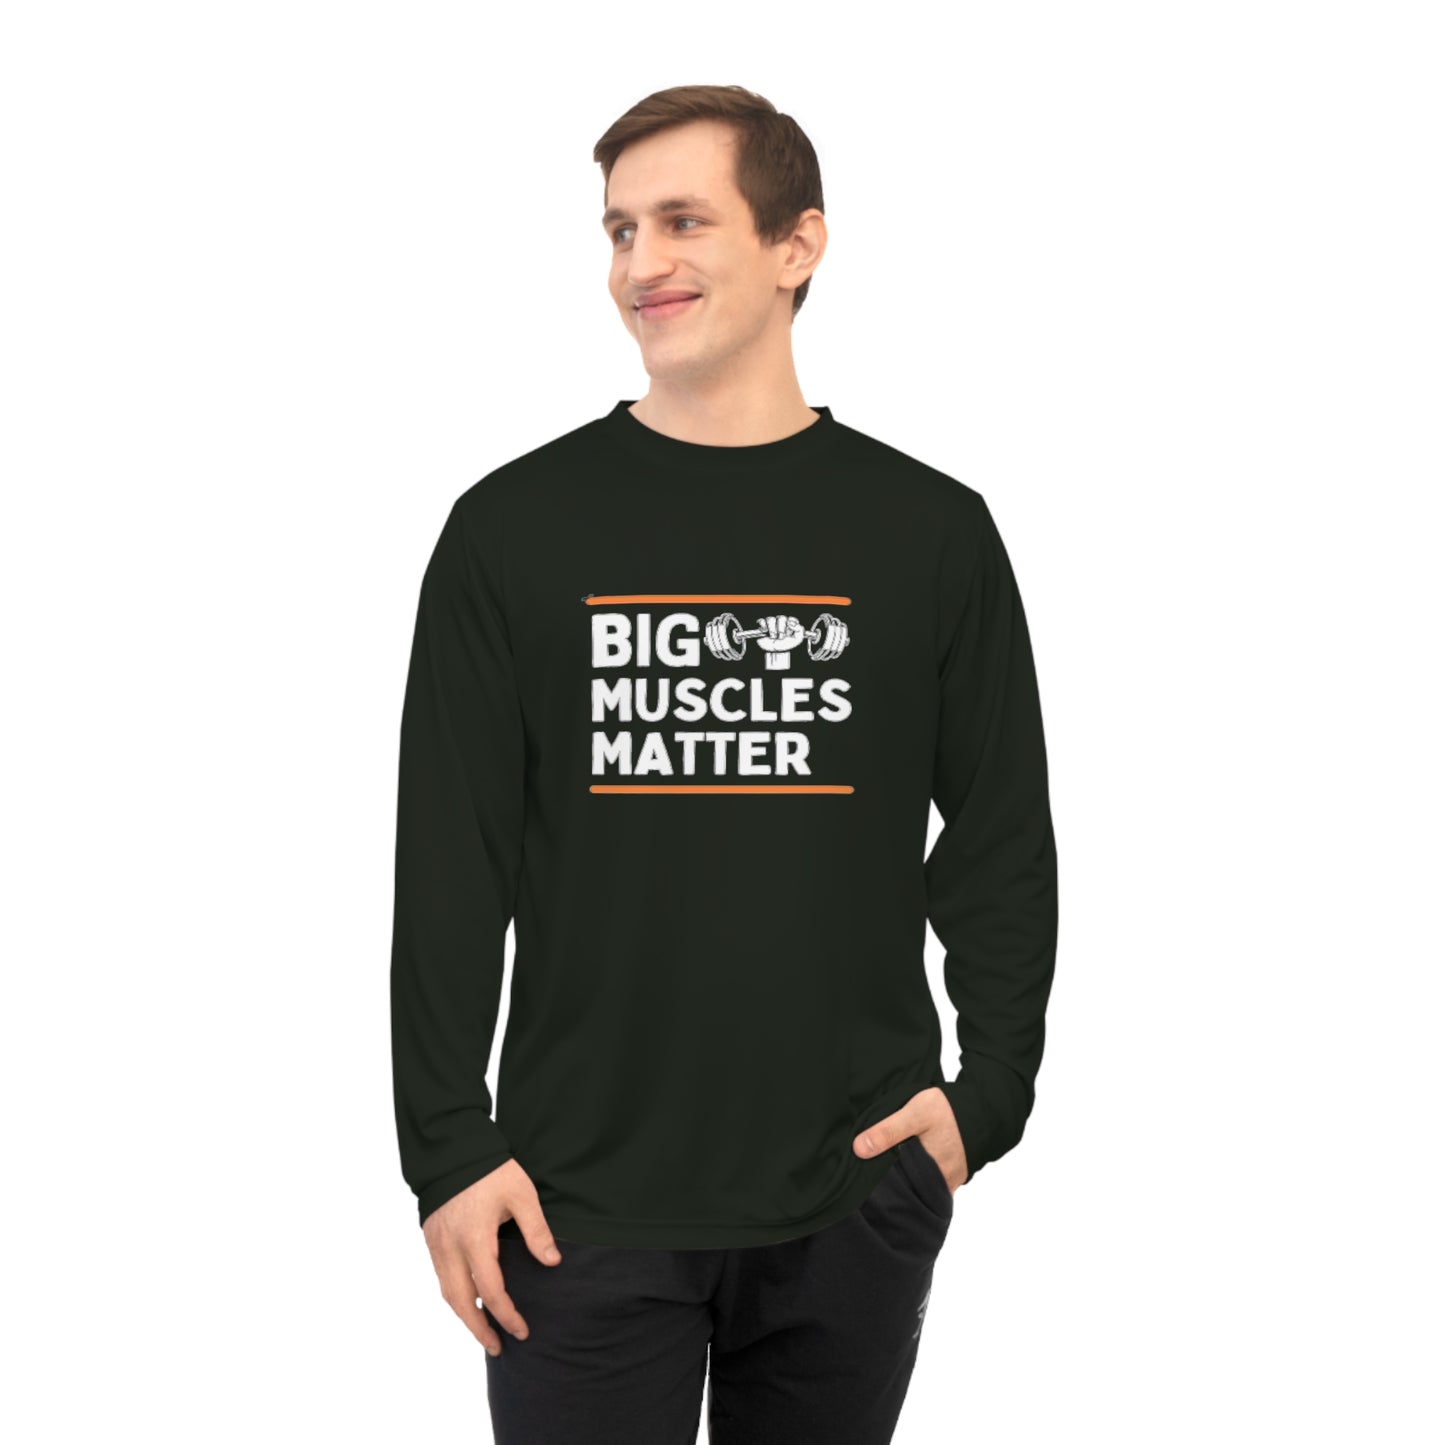 Big Muscles Matter Unisex Dry Fit Performance Long Sleeve Shirt